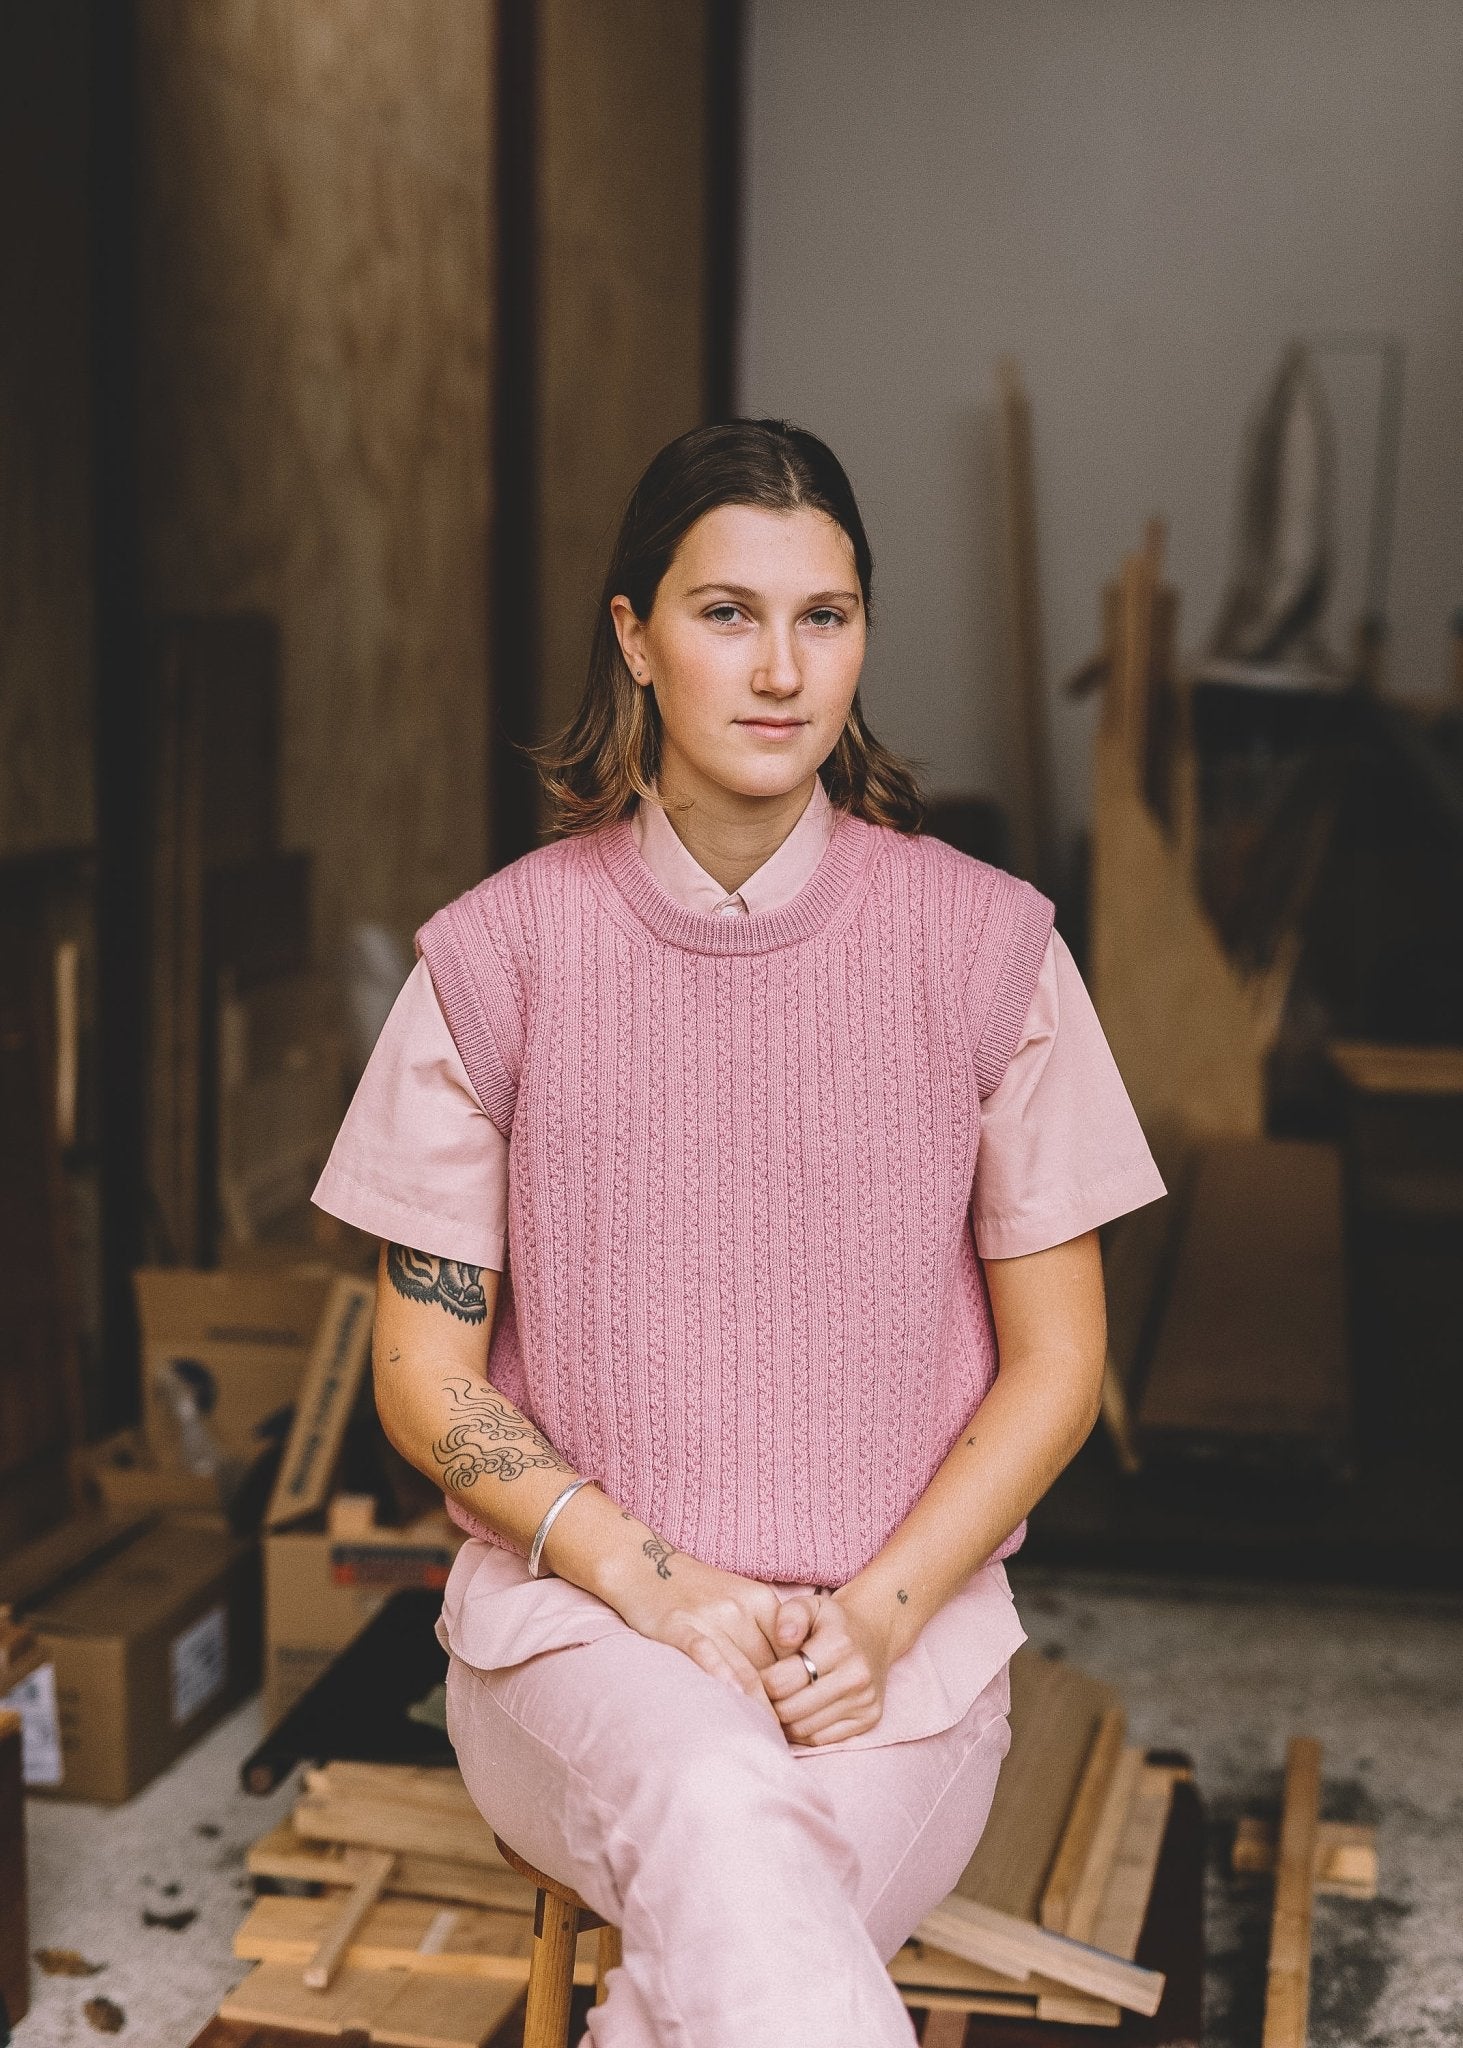 Mars Knitwear - Merino Wool Vest - Rosa - Ensemble Studios